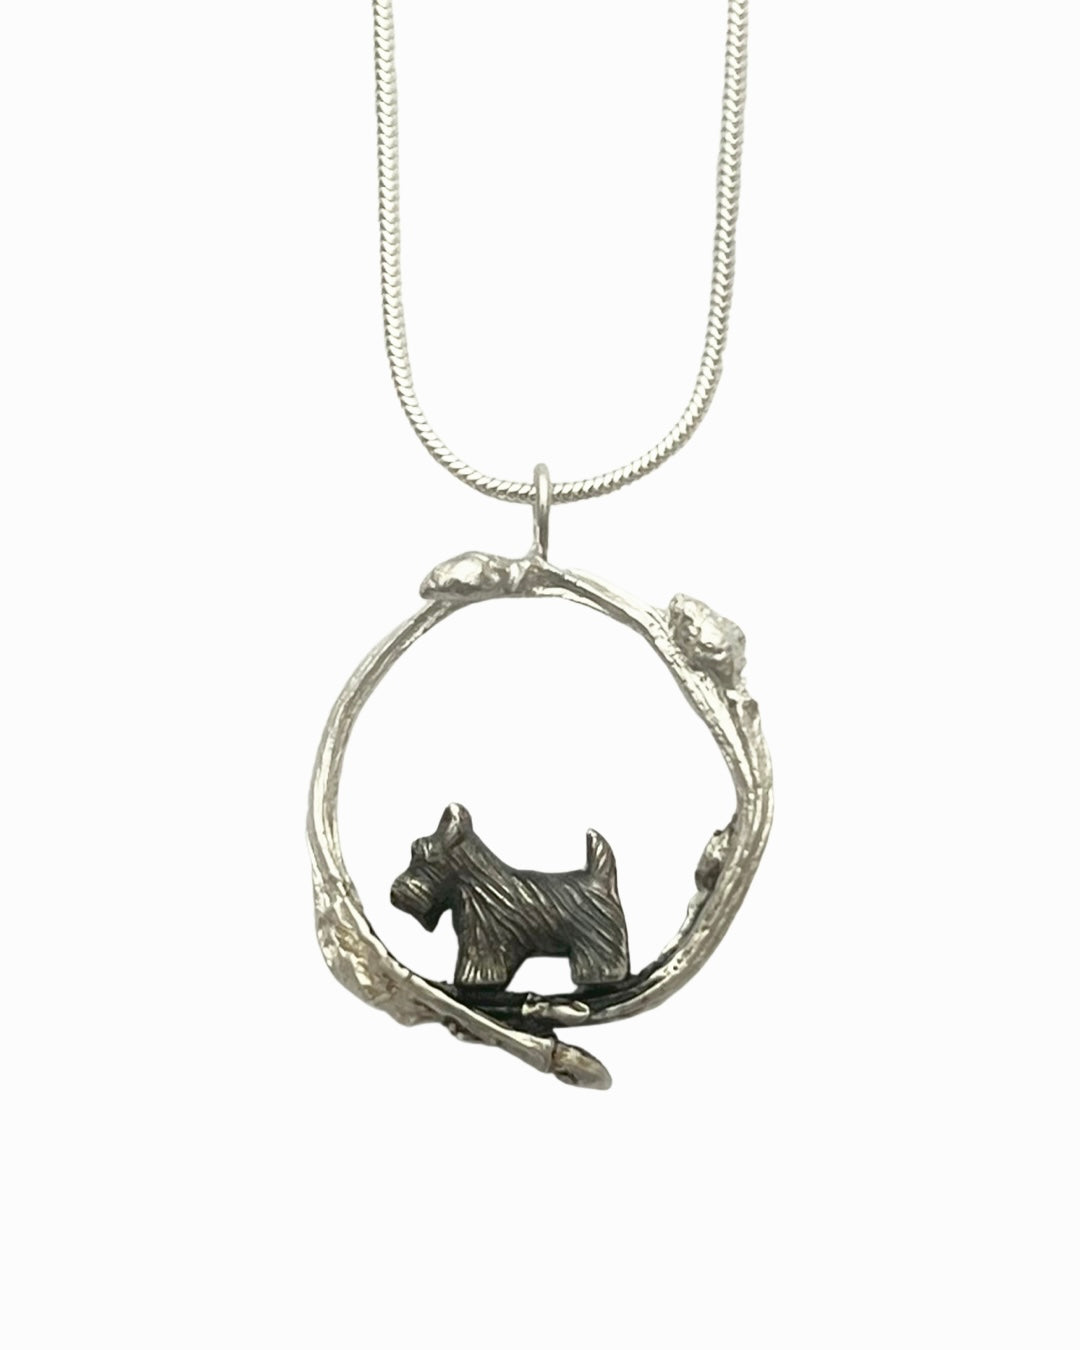 Scottish Terrier in twig circle pendant